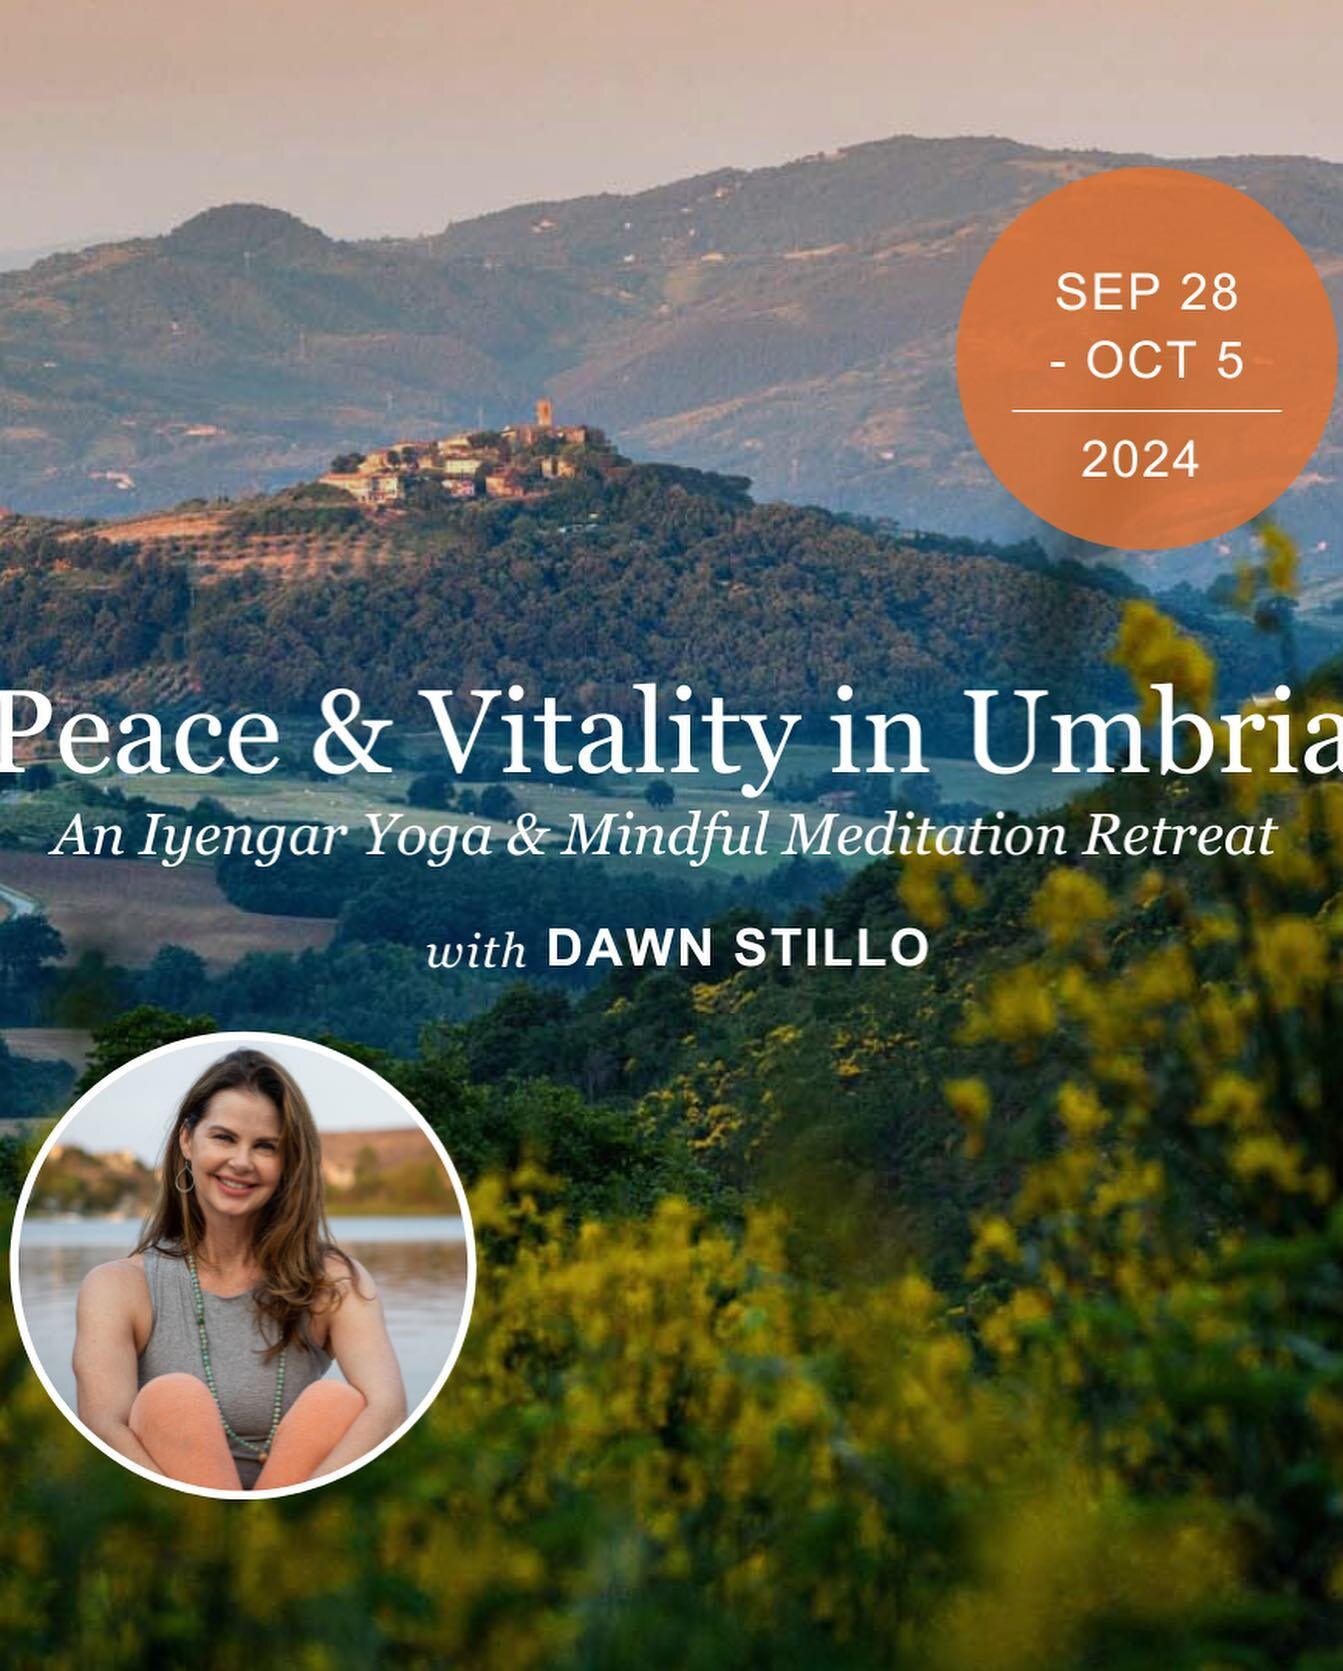 Black Friday Sale until Dec. 22nd -$400 off 
Peace and Vitality in Umbria  Sept 28-Oct 5, 2024💛🧡💛🧡

More details on dawnstillo.com -retreats

@internationalyoga #yogatravel #iyengar #yoga #italy #travel